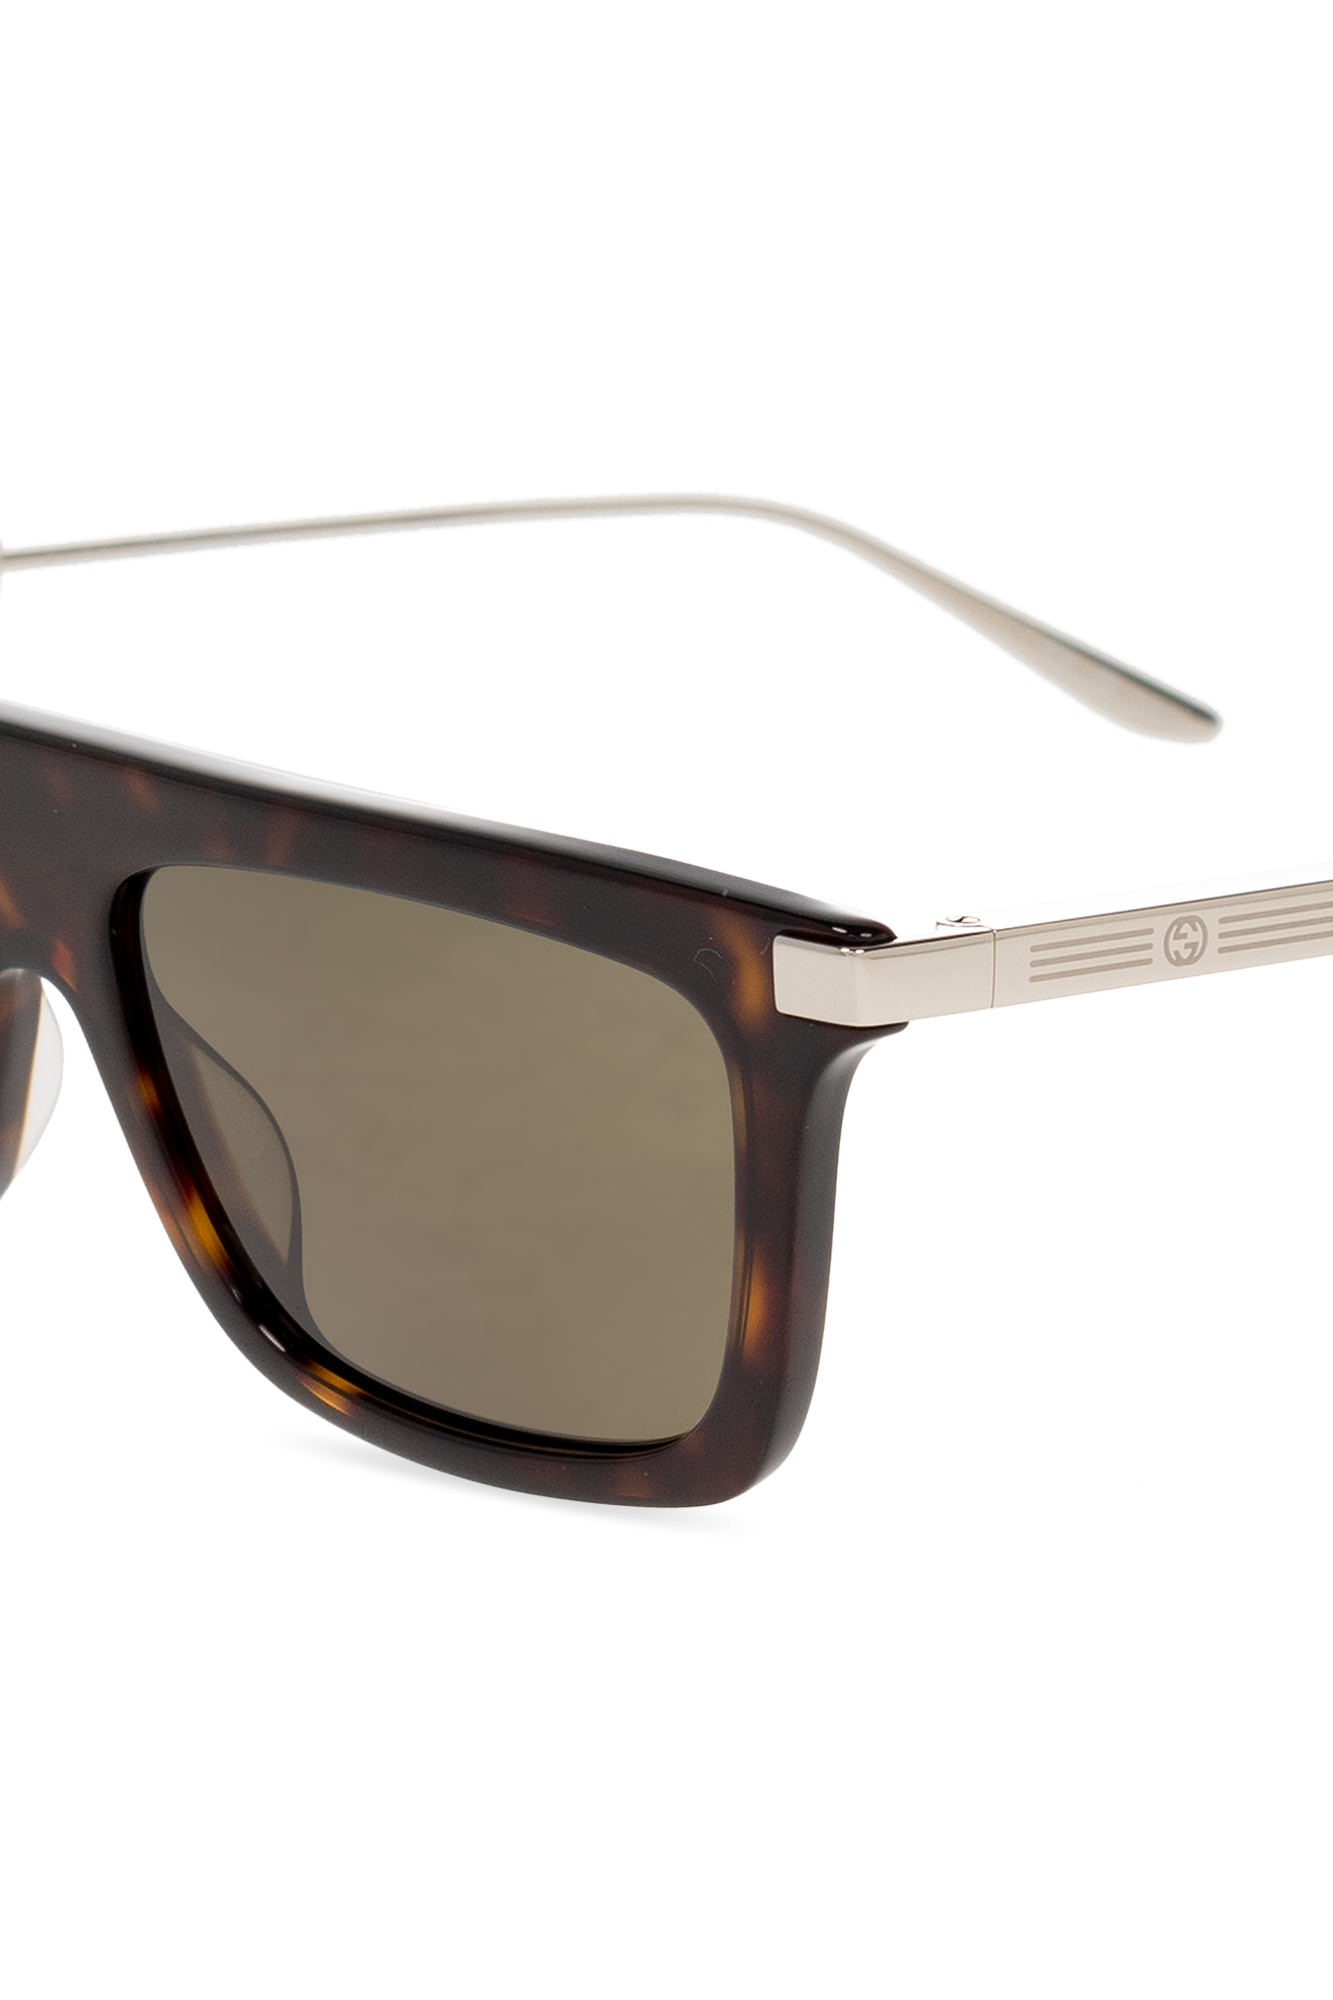 Gucci sunglasses ARR with logo